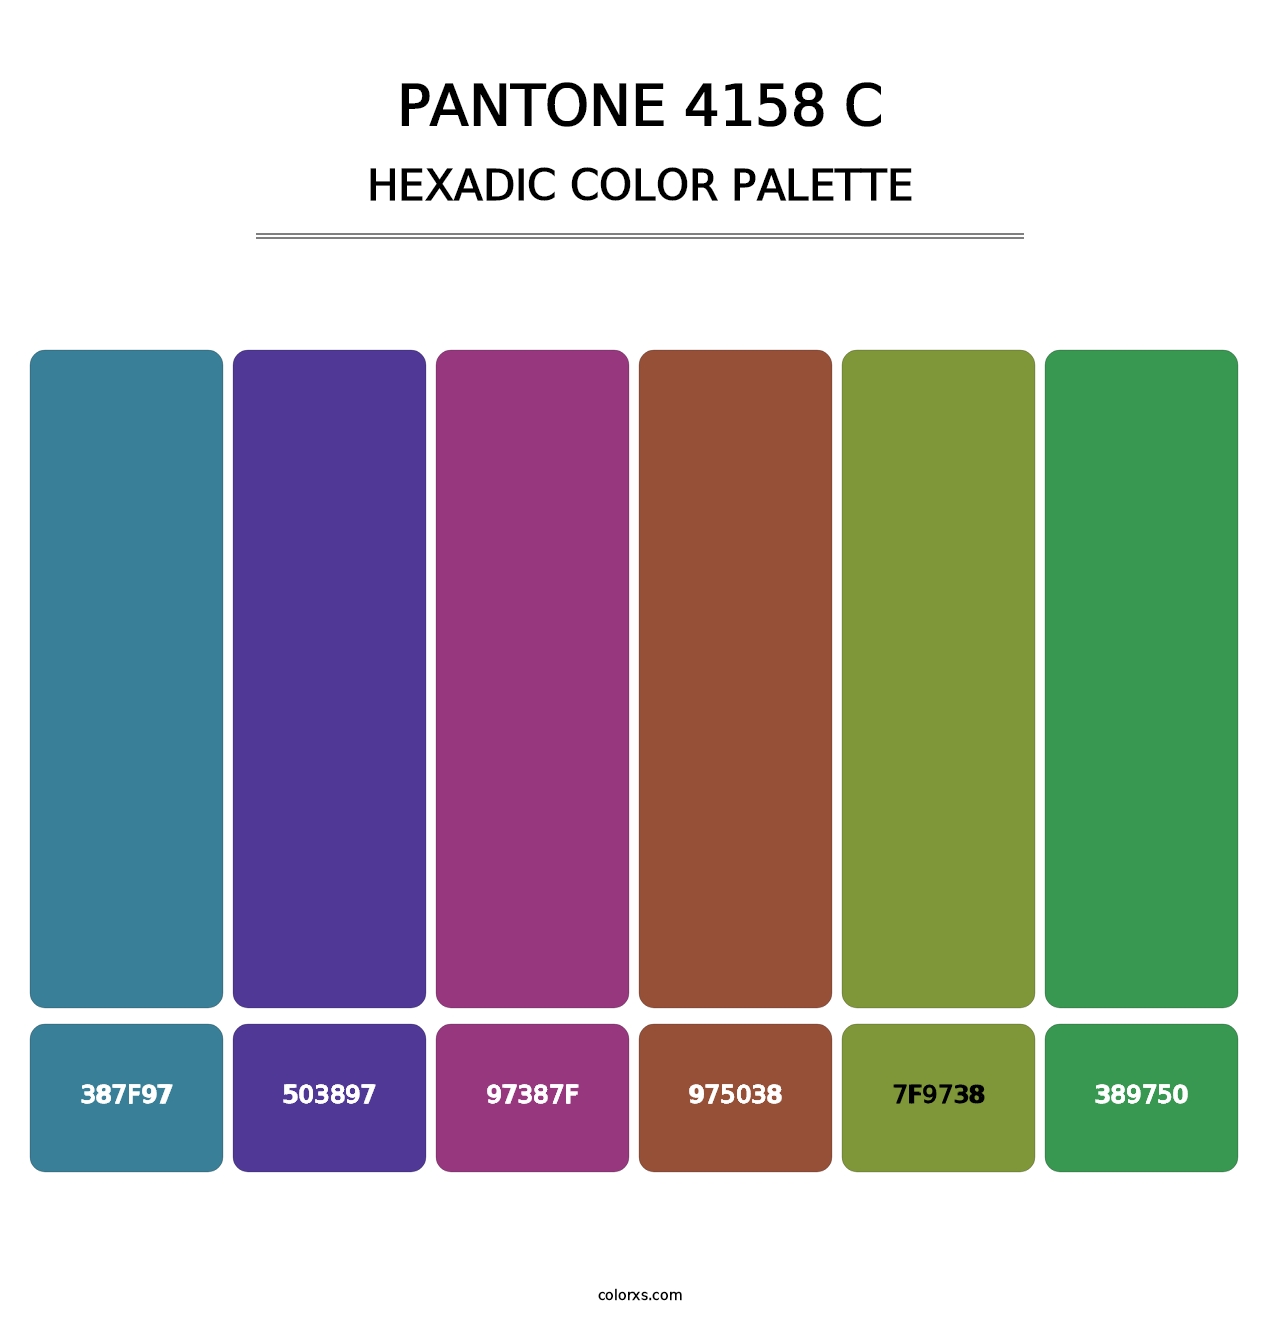 PANTONE 4158 C - Hexadic Color Palette